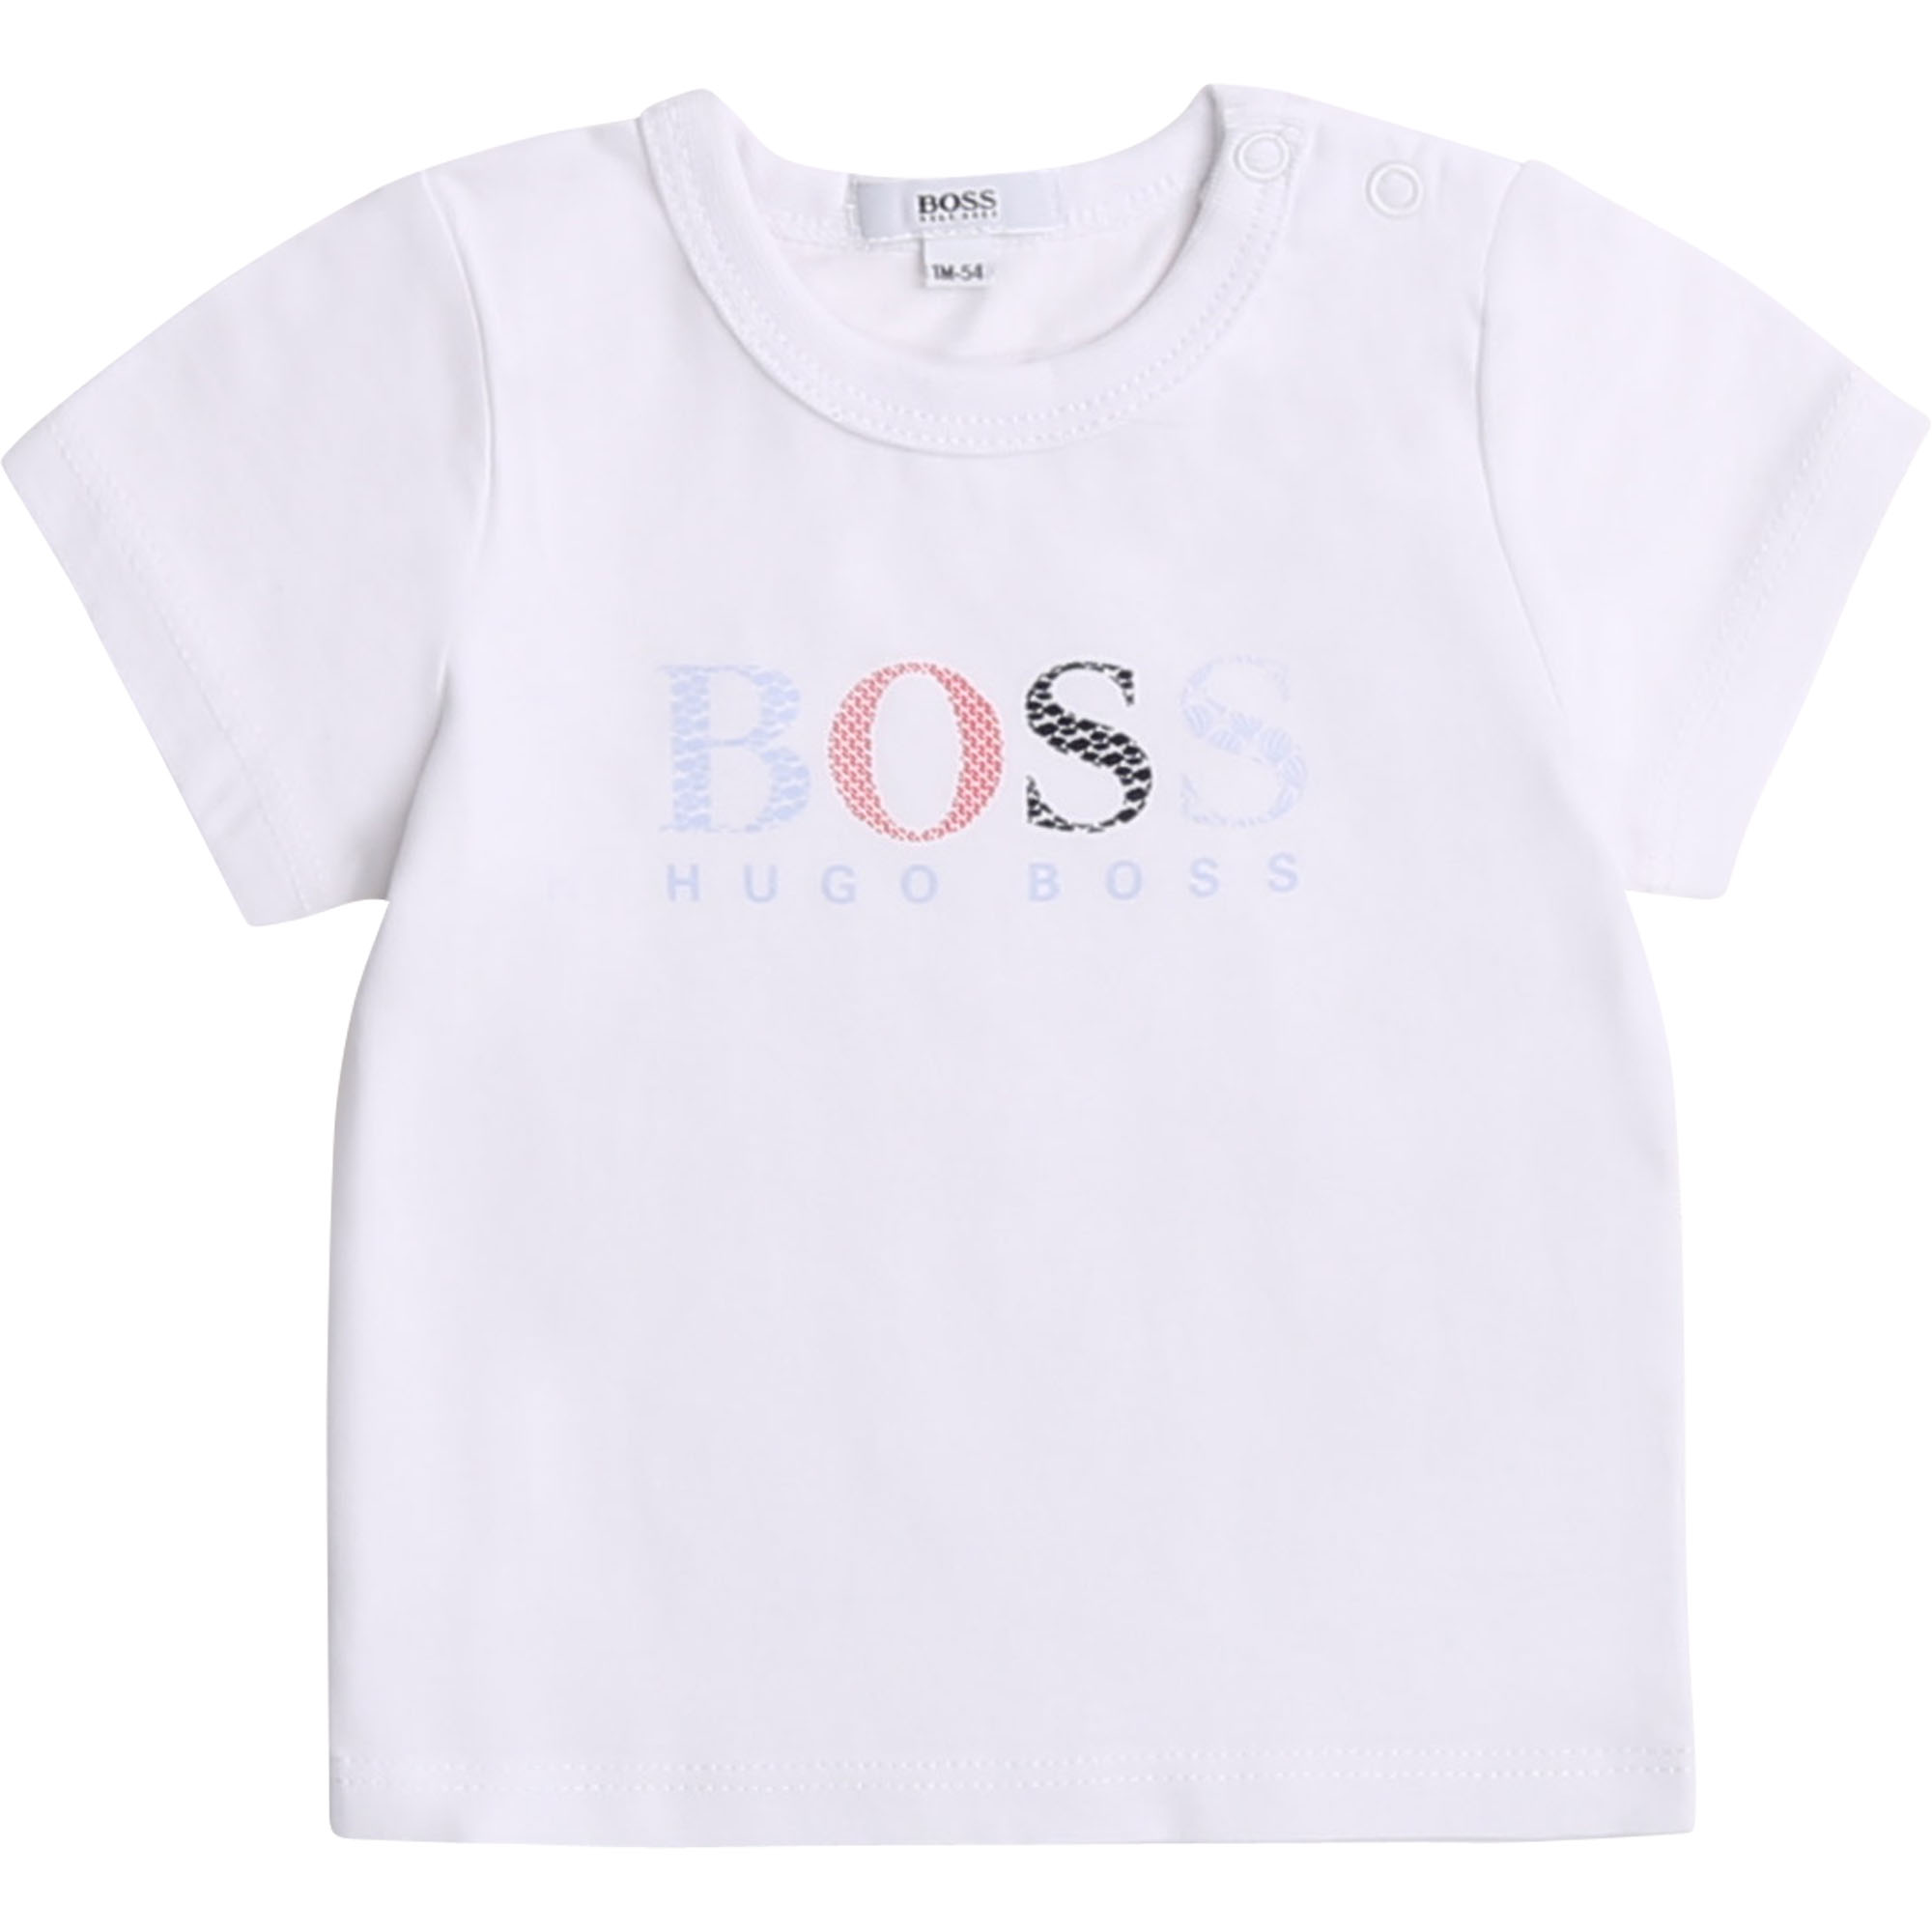 hugo boss baby tops